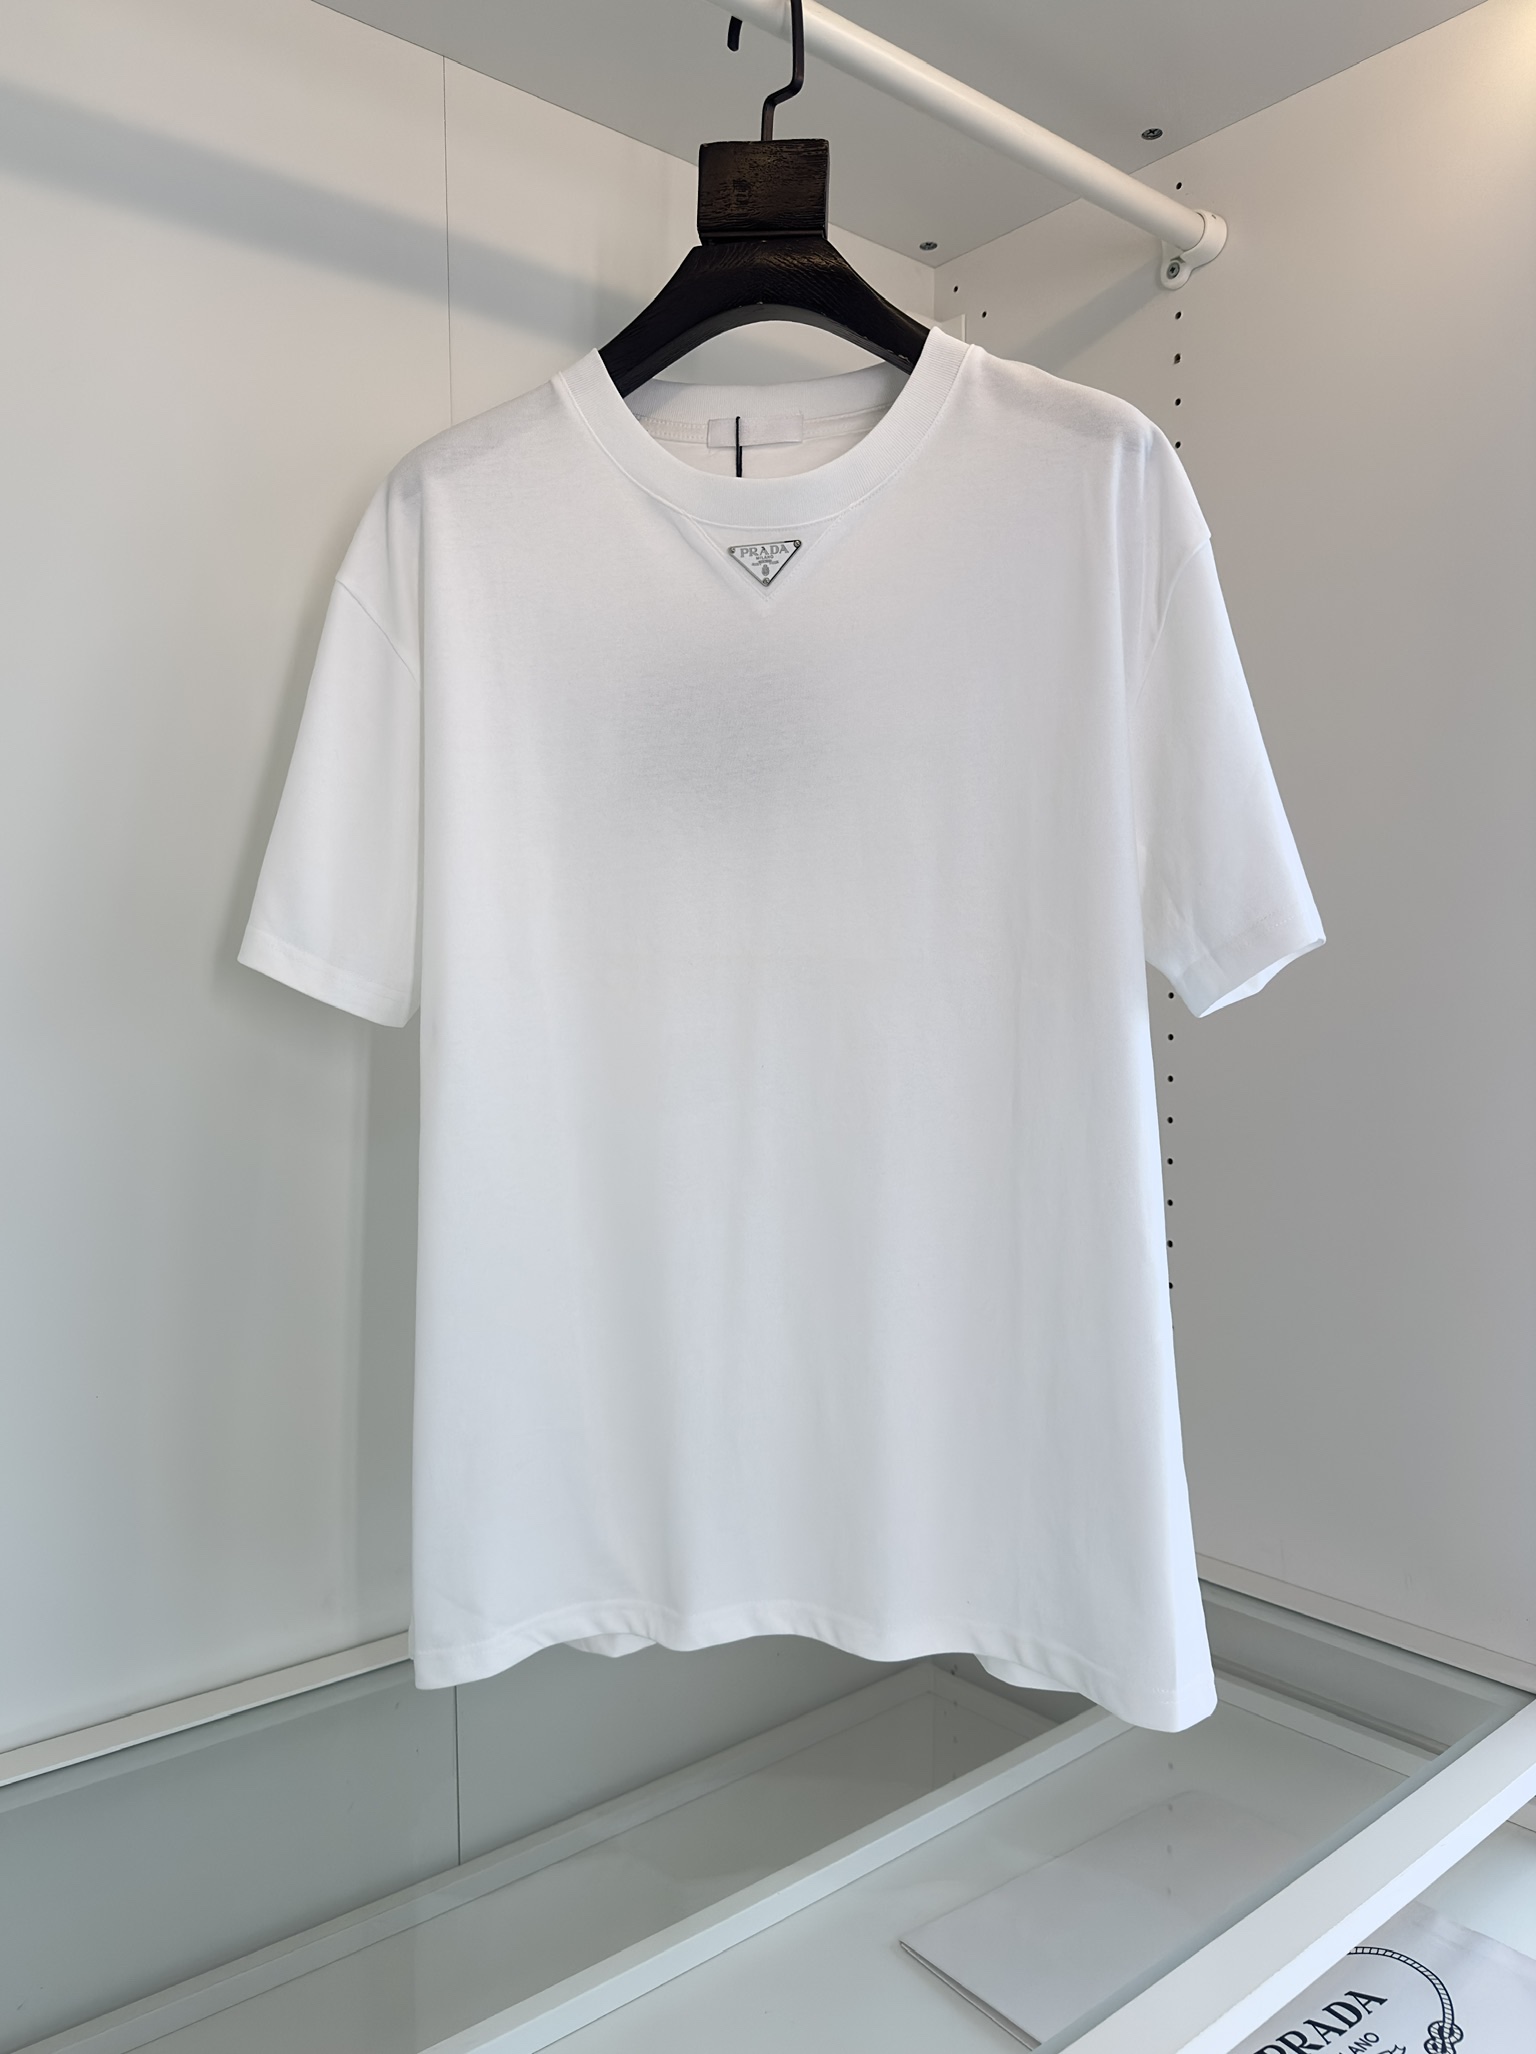 Prada Clothing T-Shirt Black White Unisex Cotton Double Yarn Spring/Summer Collection Short Sleeve